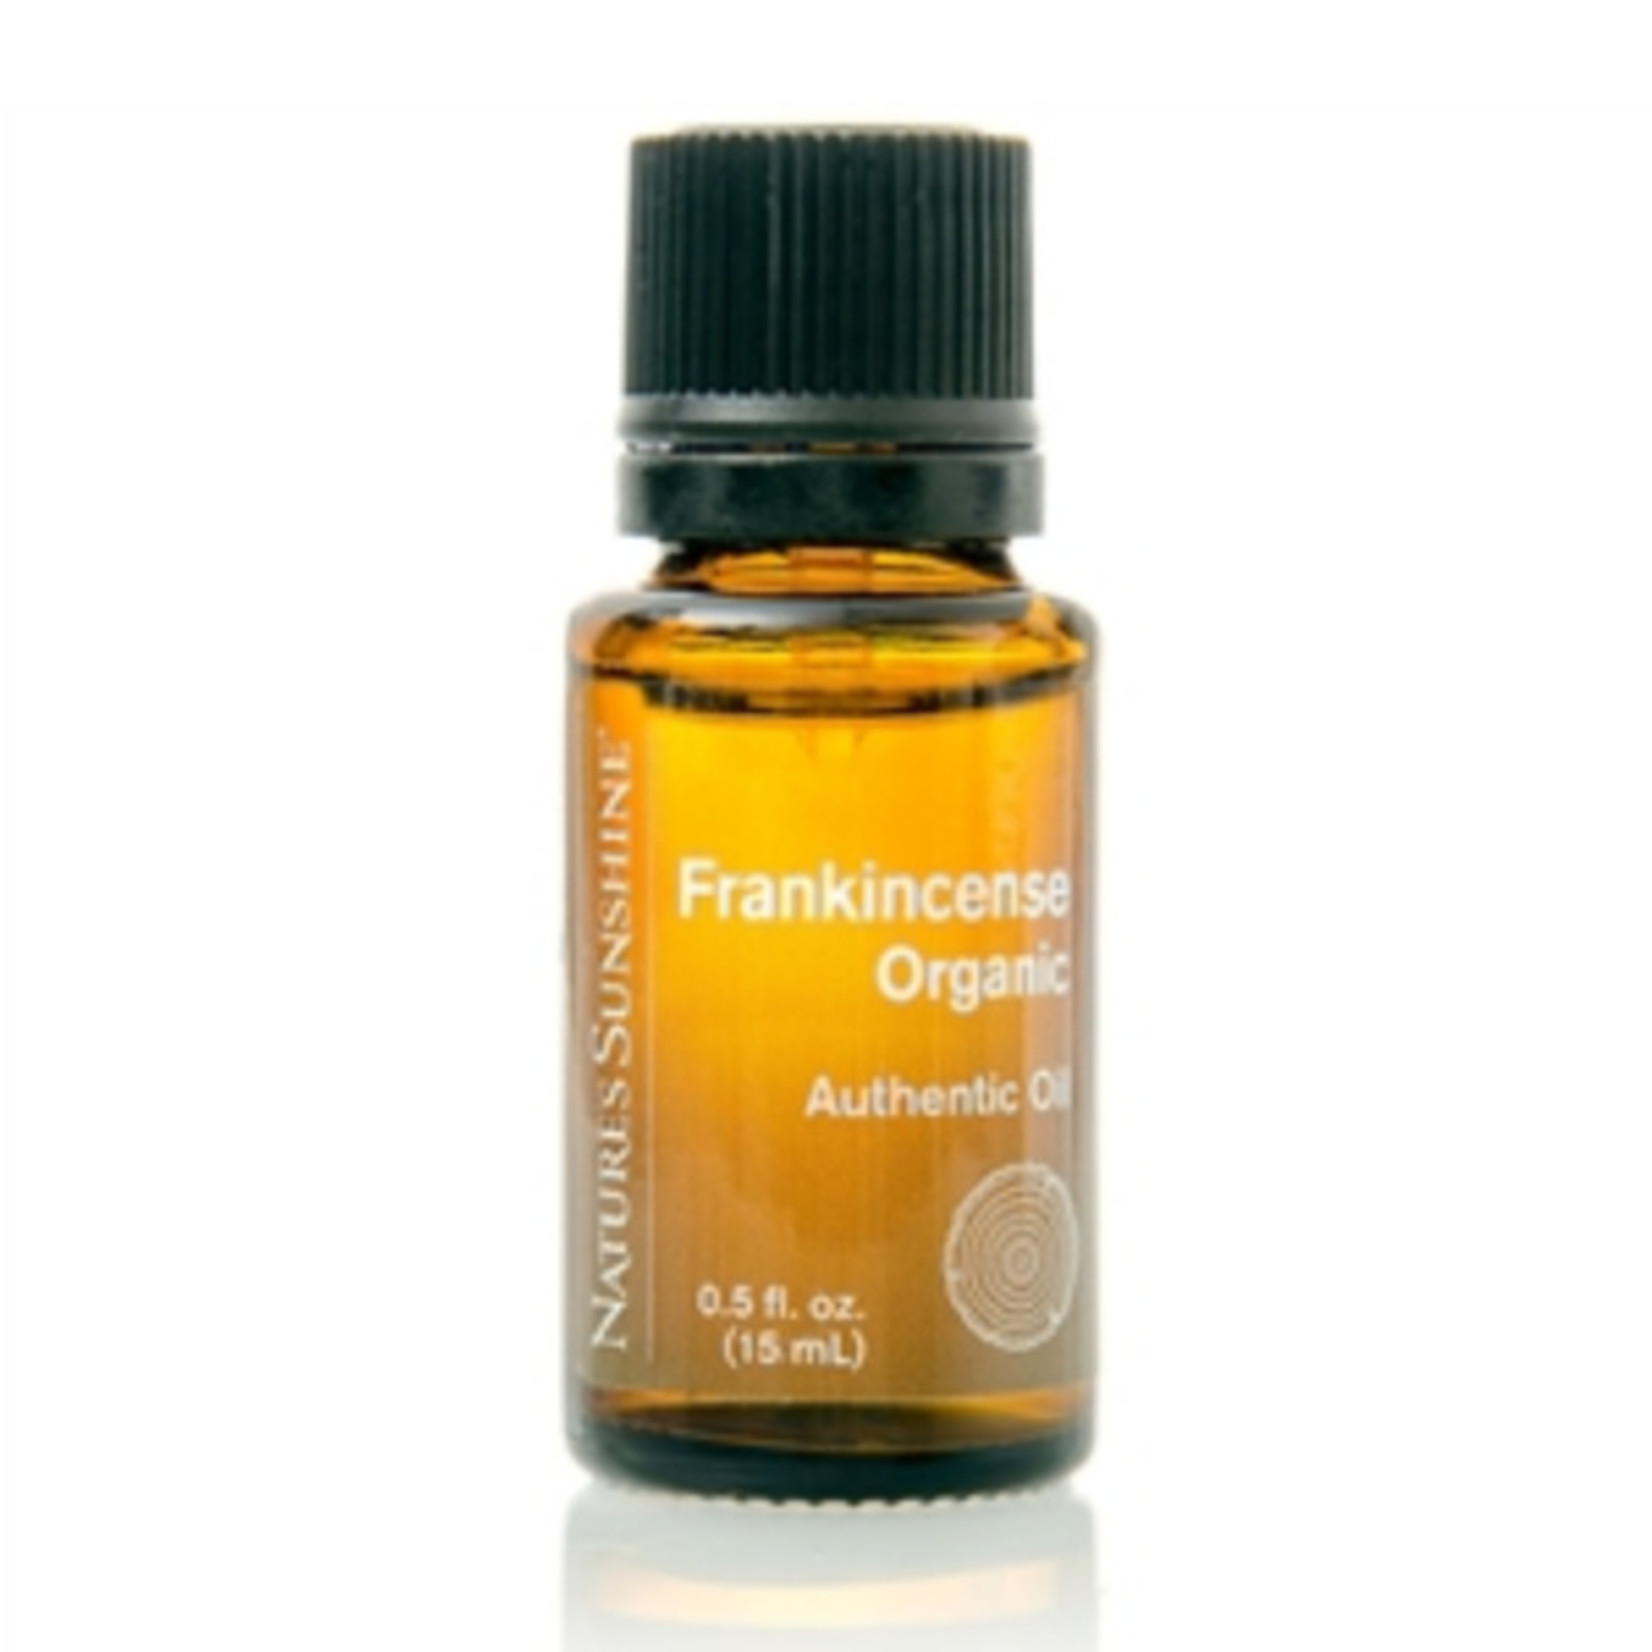 Nature's Sunshine Organic Frankincense 15 ml